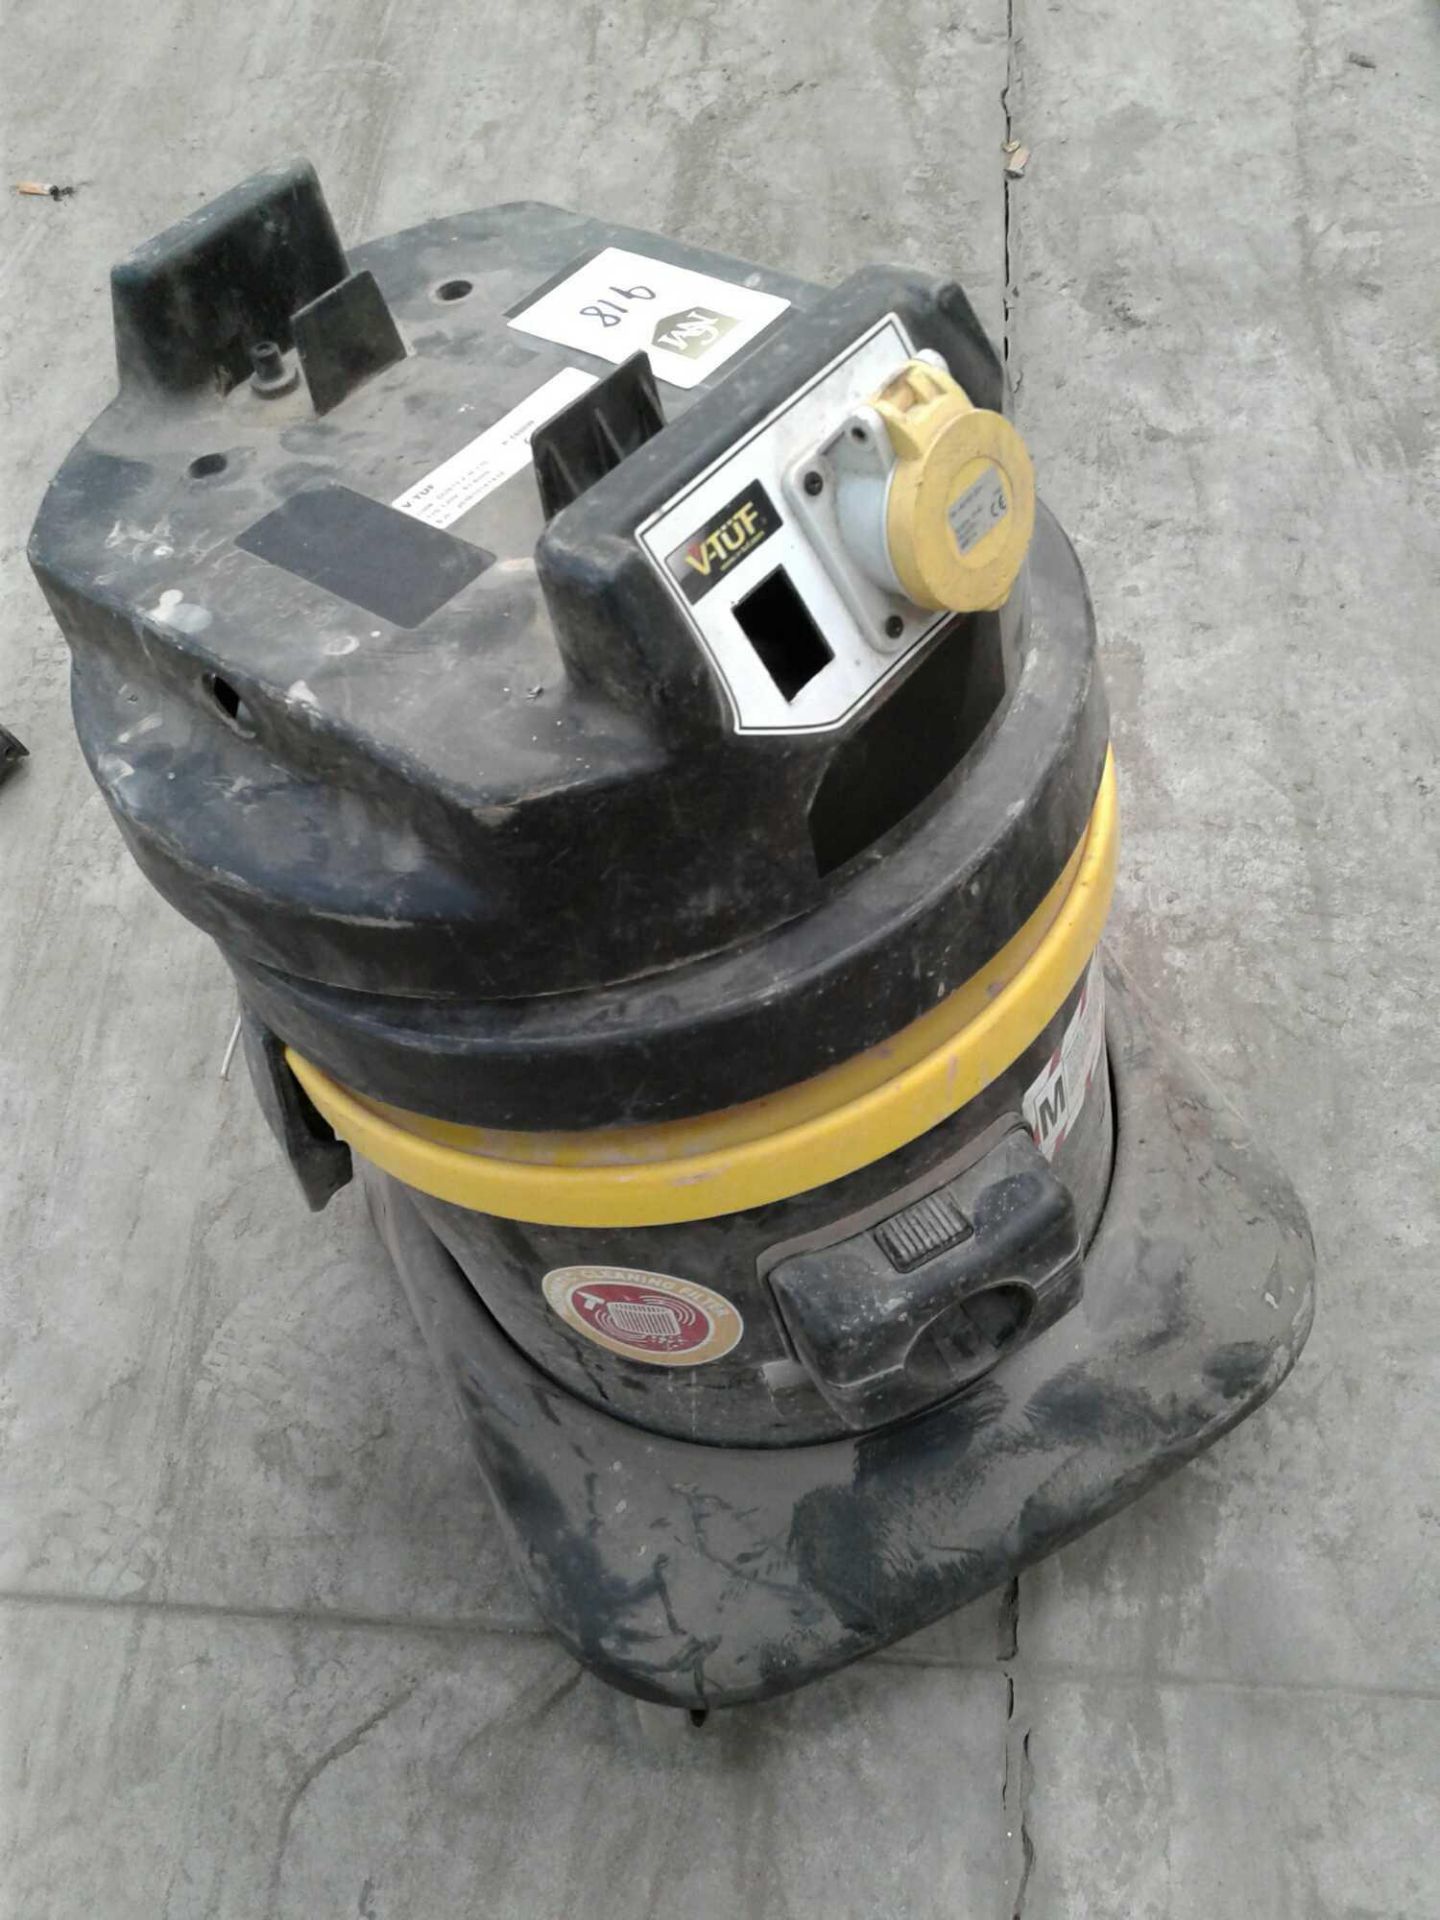 V-tuf industrial vacuum cleaner